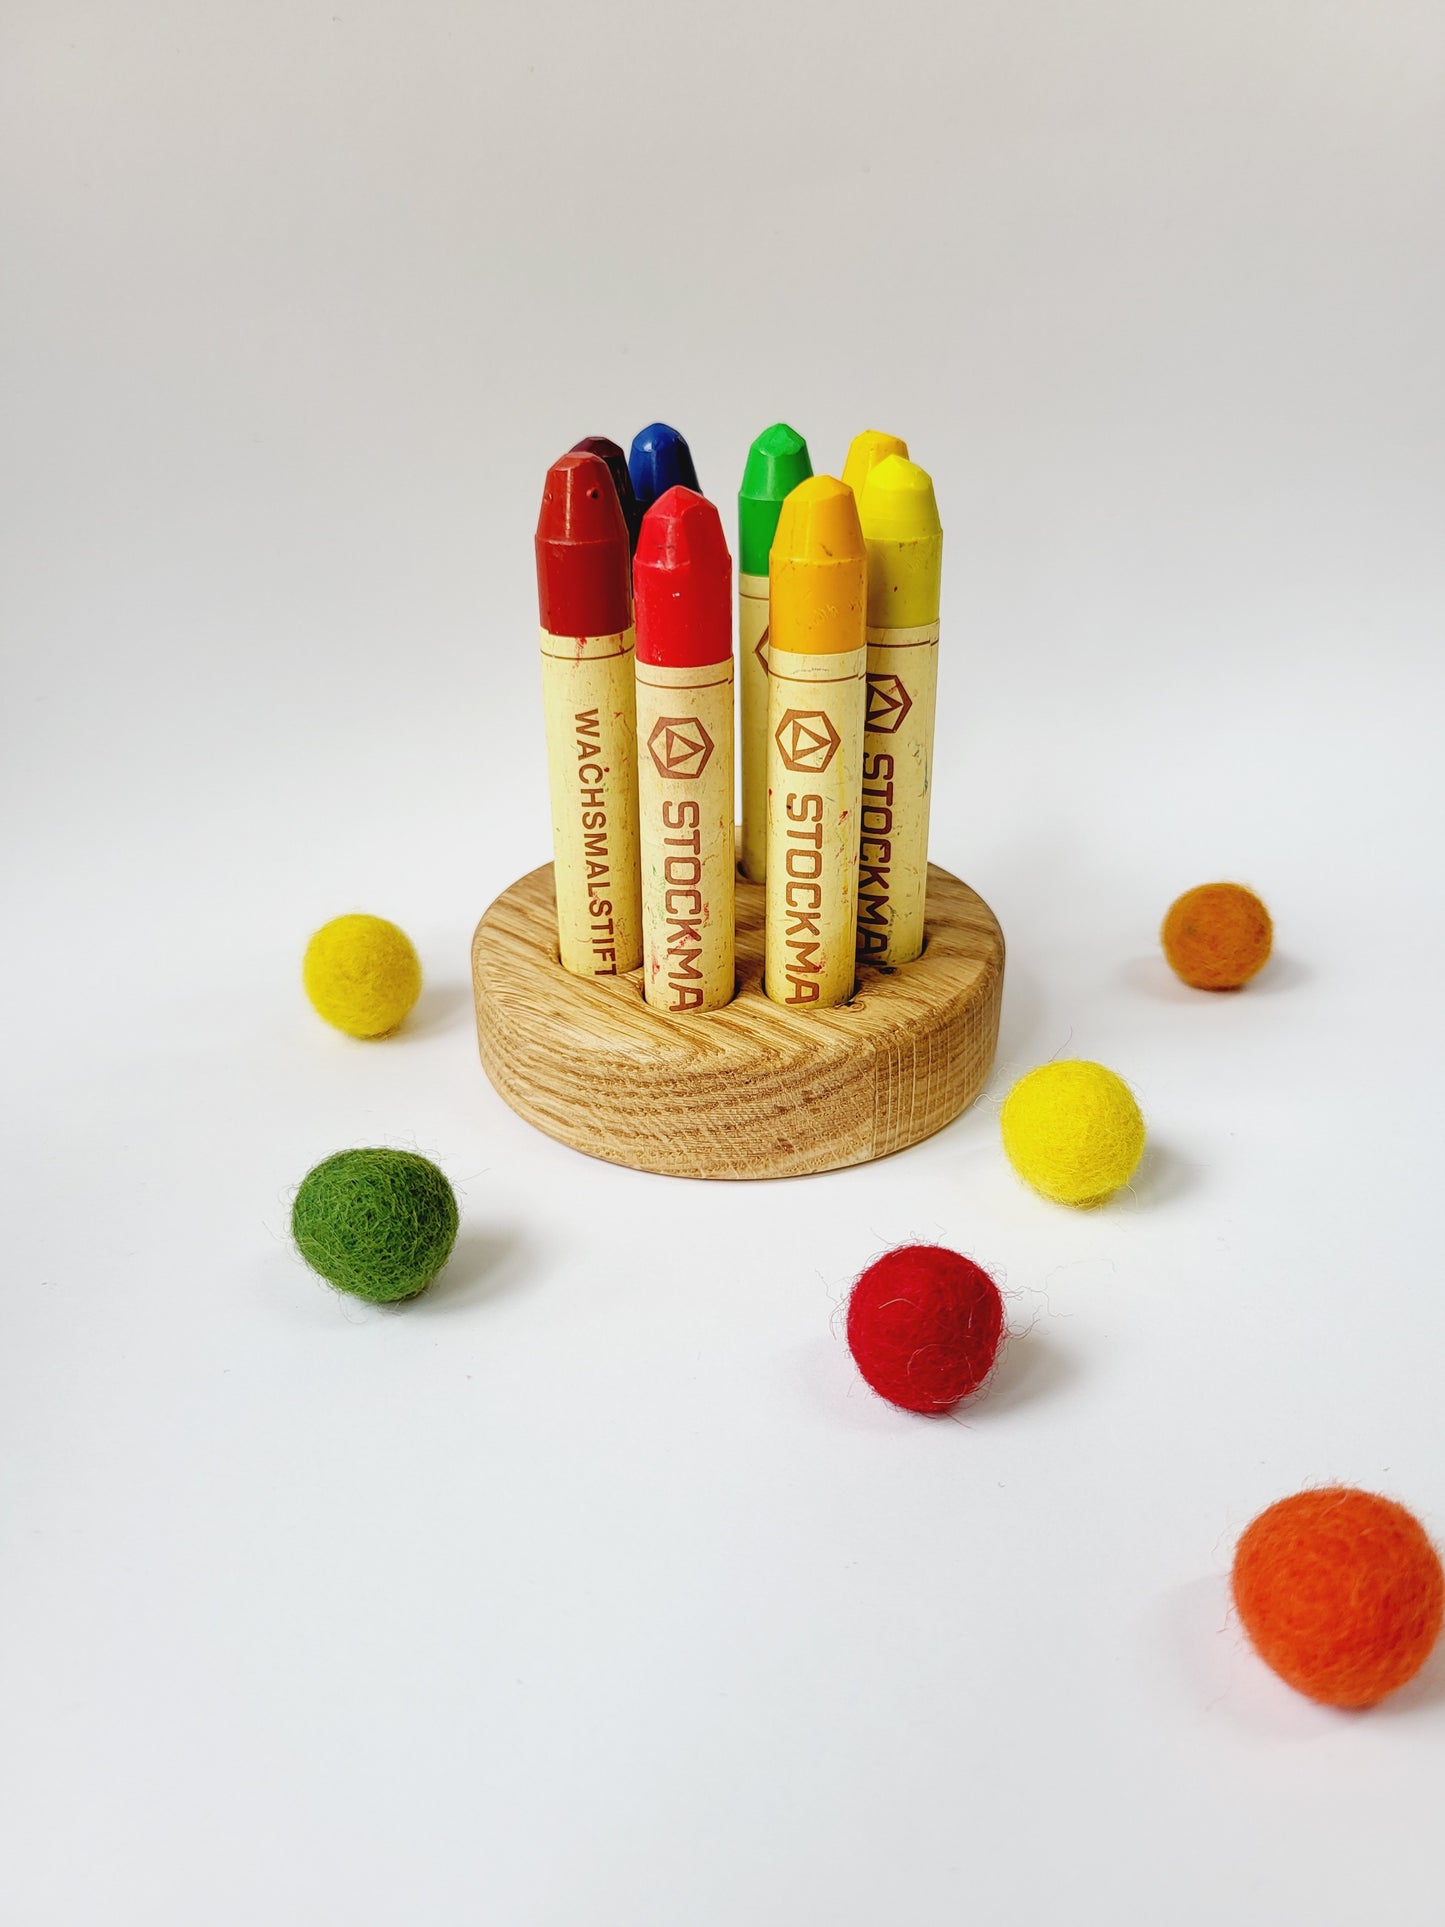 Stockmar crayon holder for 8 sticks